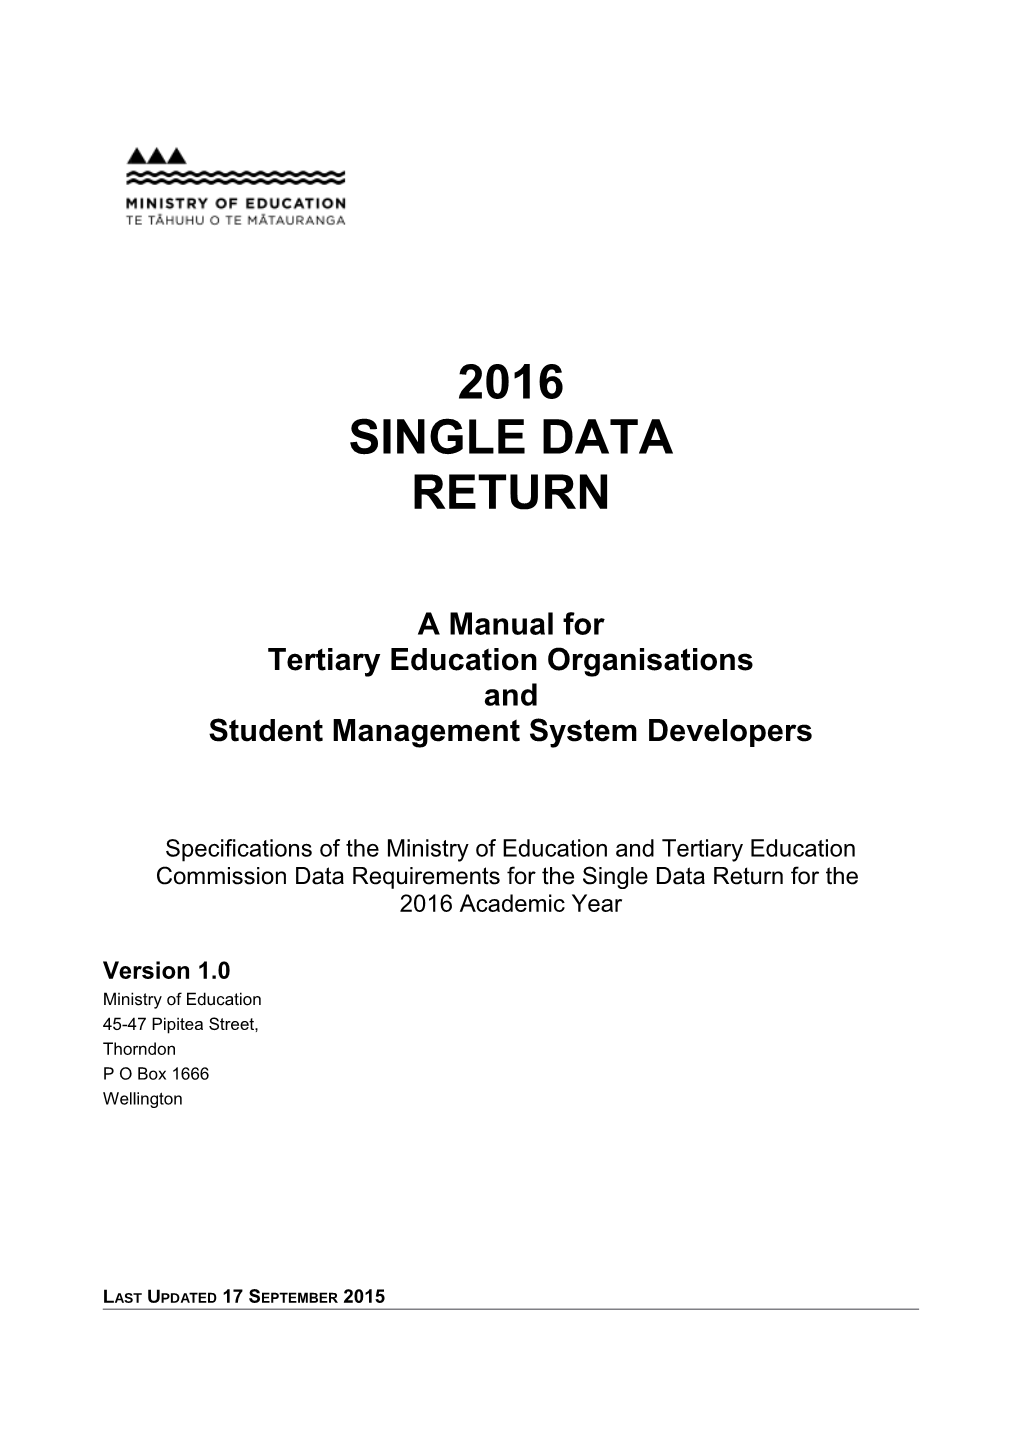 Ministry of Education - Single Data Return Manual 2016